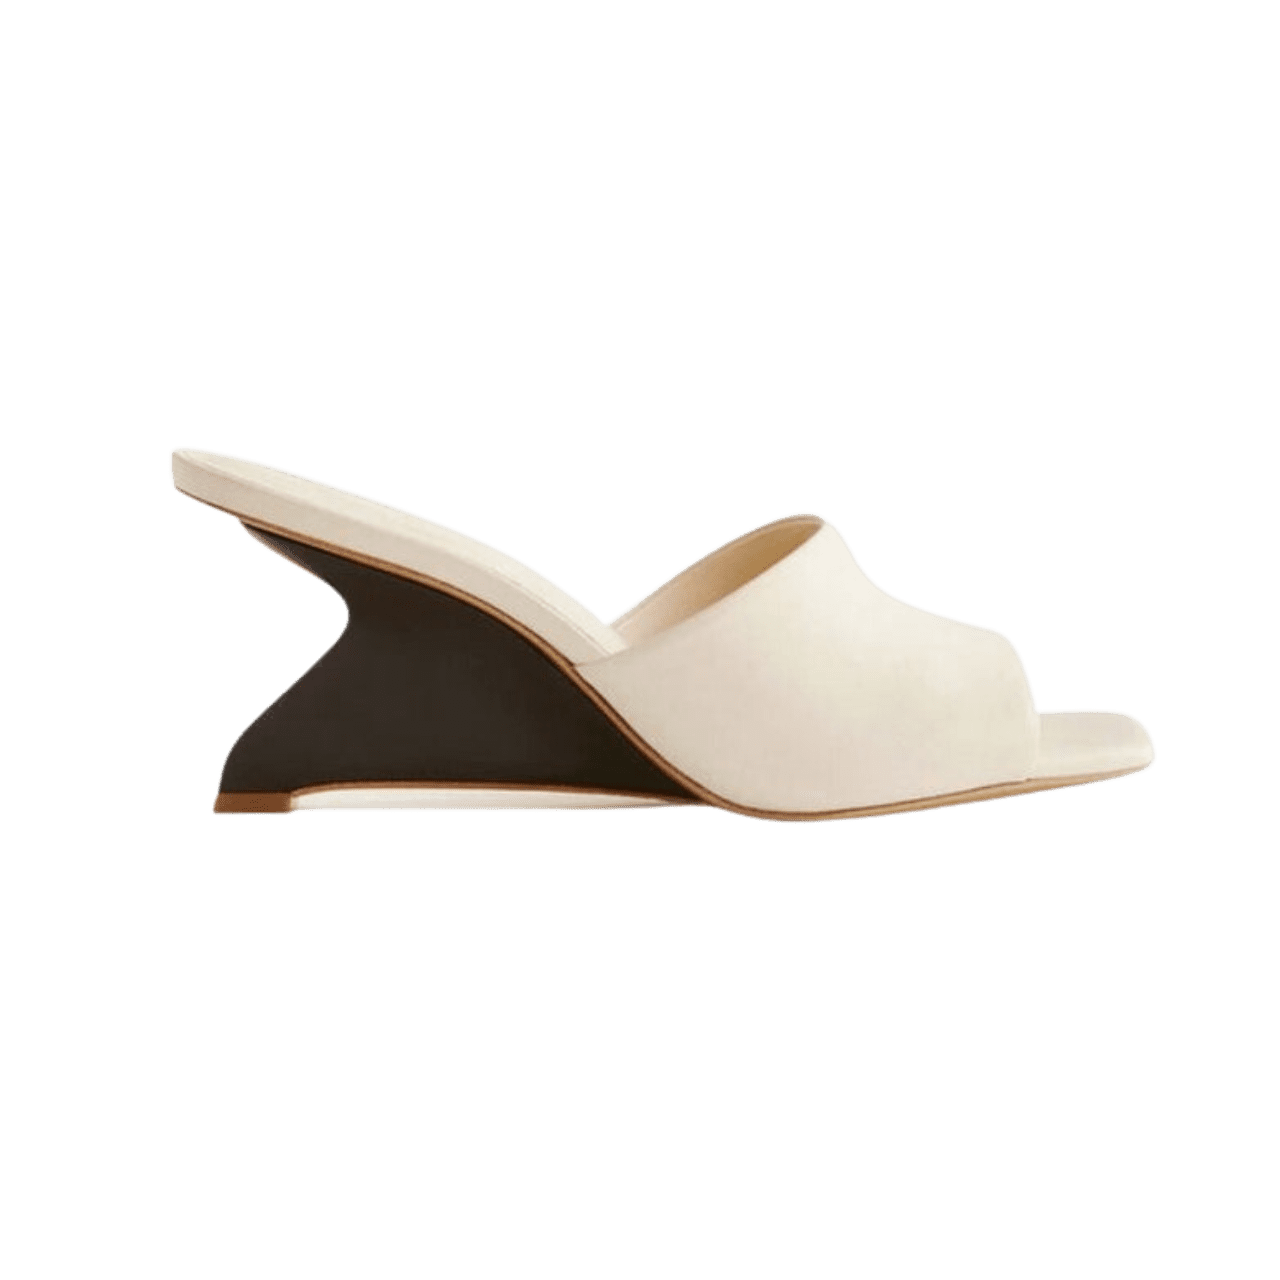 Reformation Enya wedge sandals